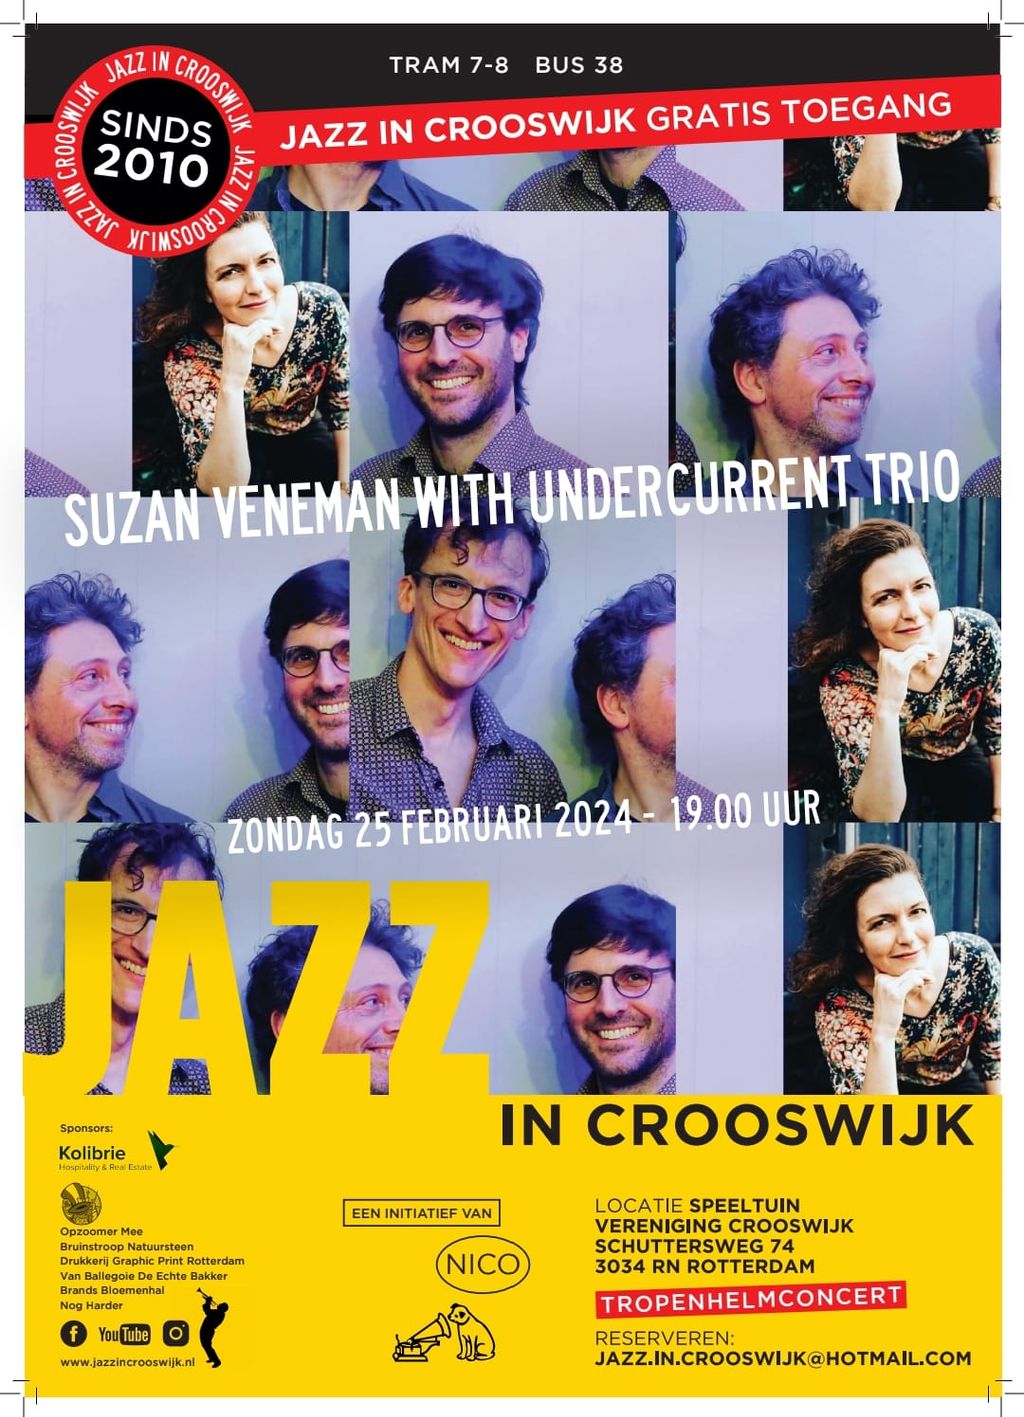 Suzan Veneman with Undercurrent Trio